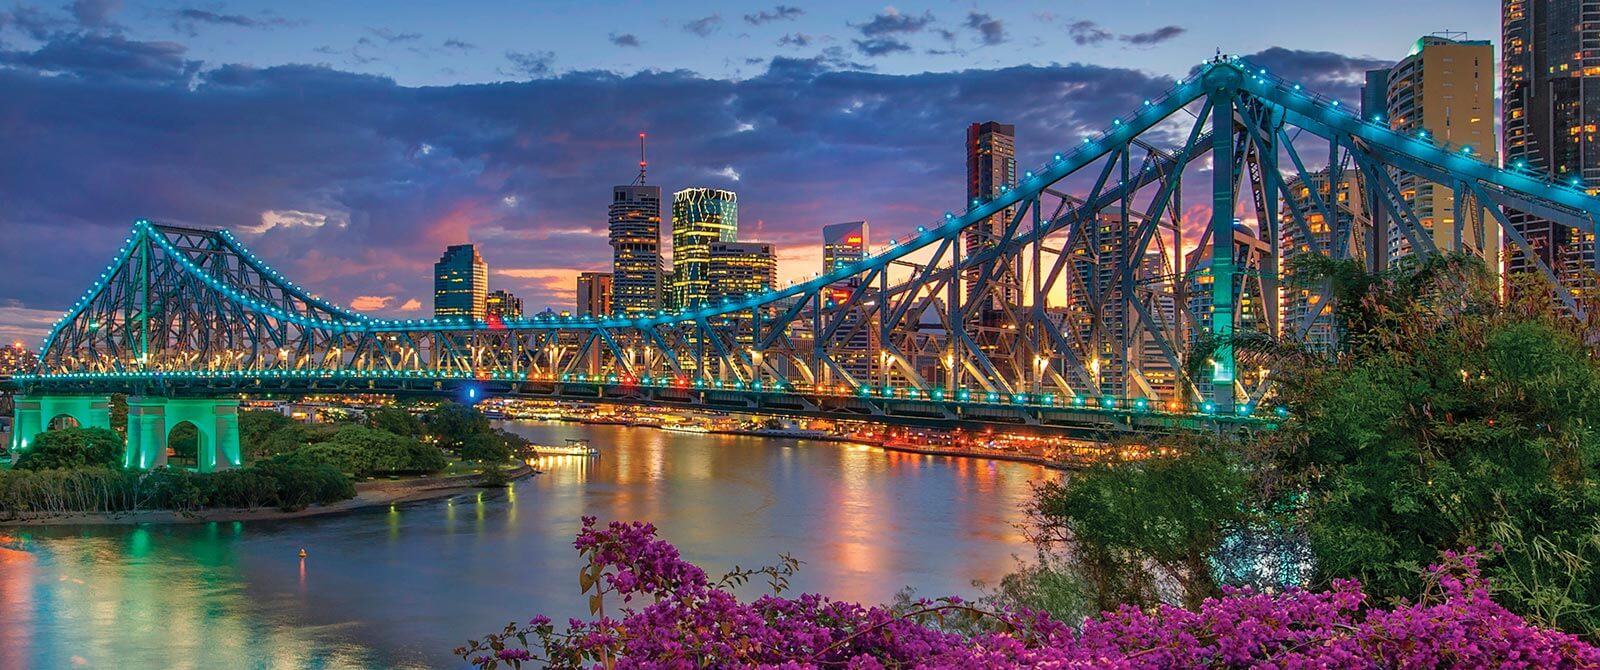 Brisbane's Story Bridge at Night - Family Trip to Australia